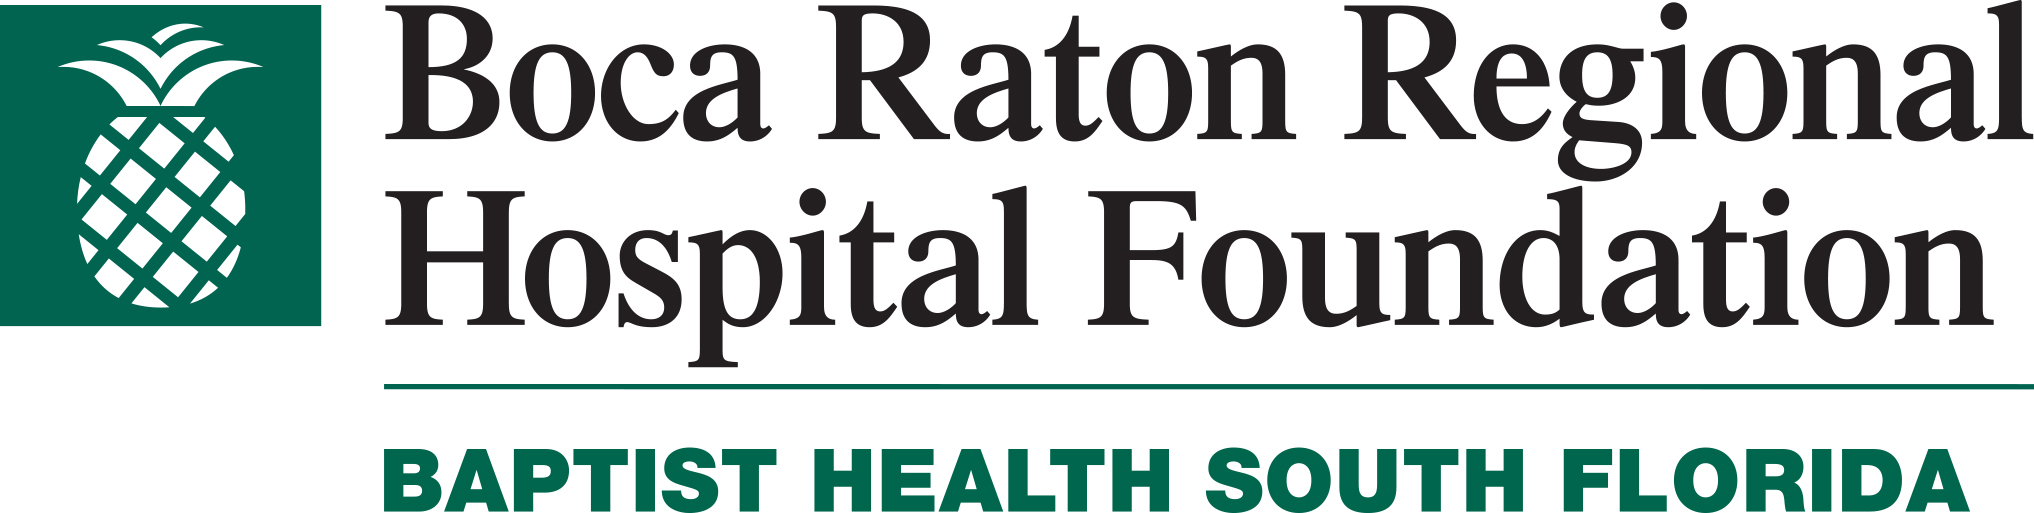 Boca Raton Regional Hospital Foundation Baptist Health South Florida 